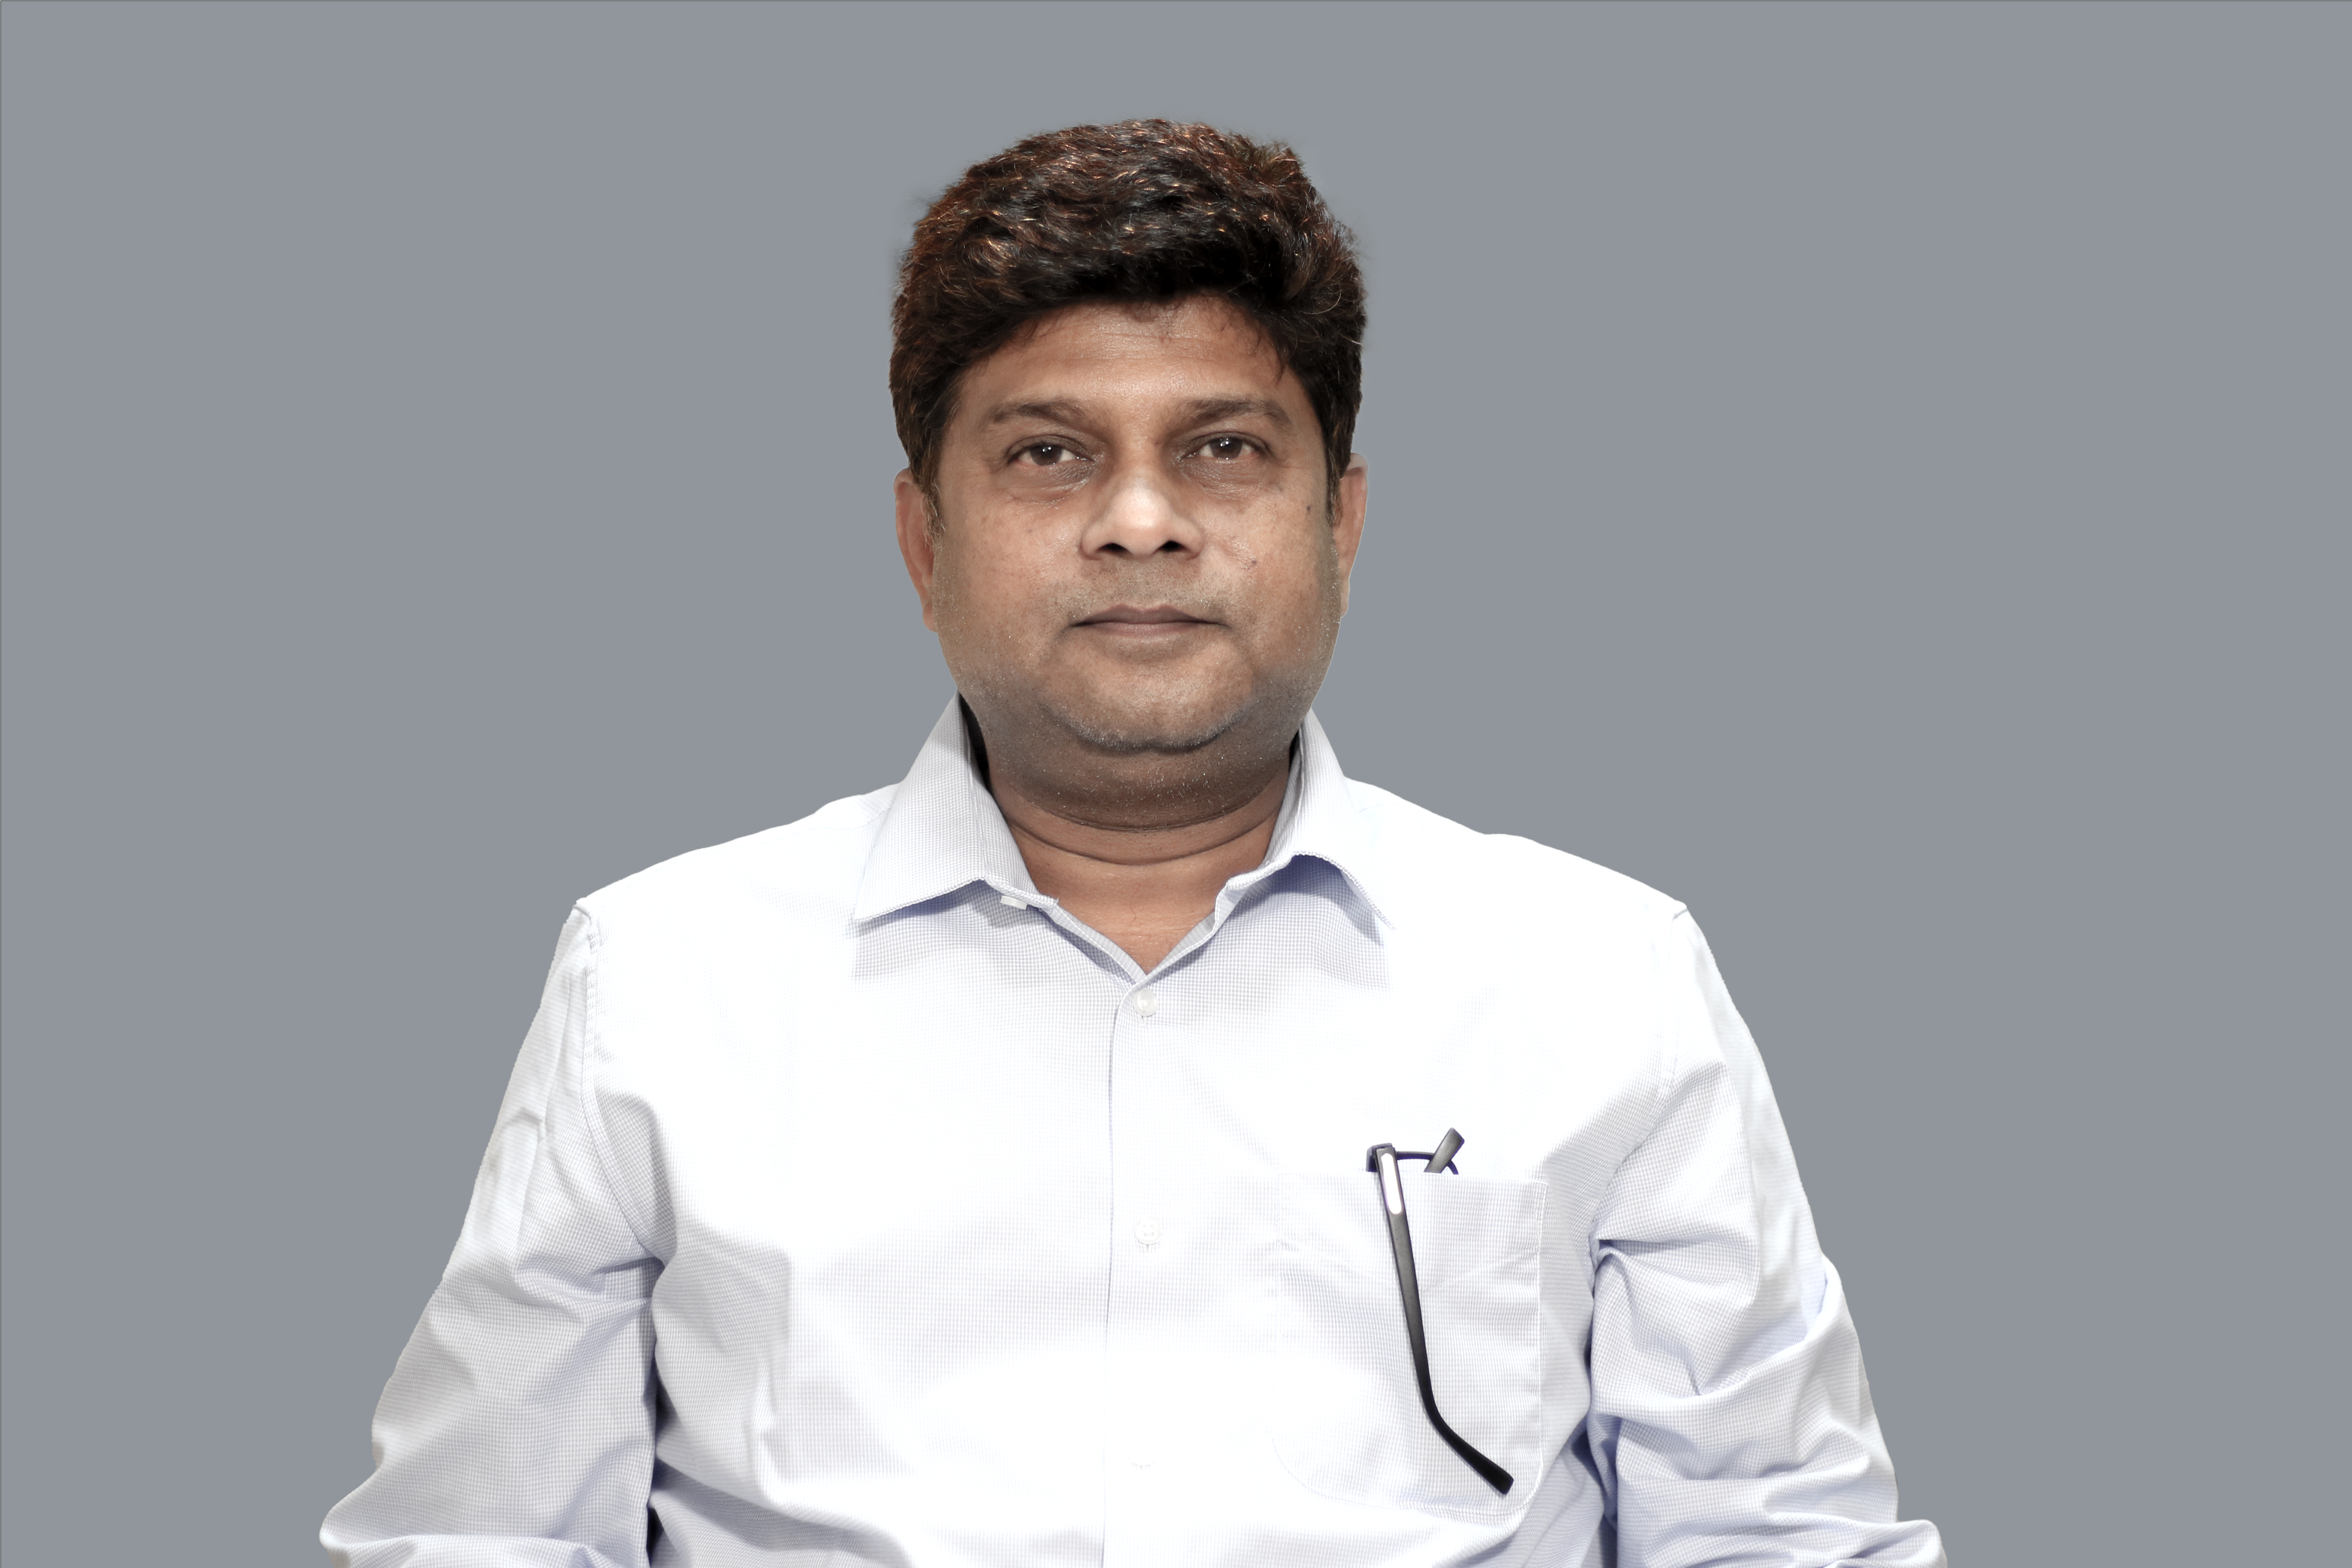 Prof. (Dr.) Krishna Srivastava